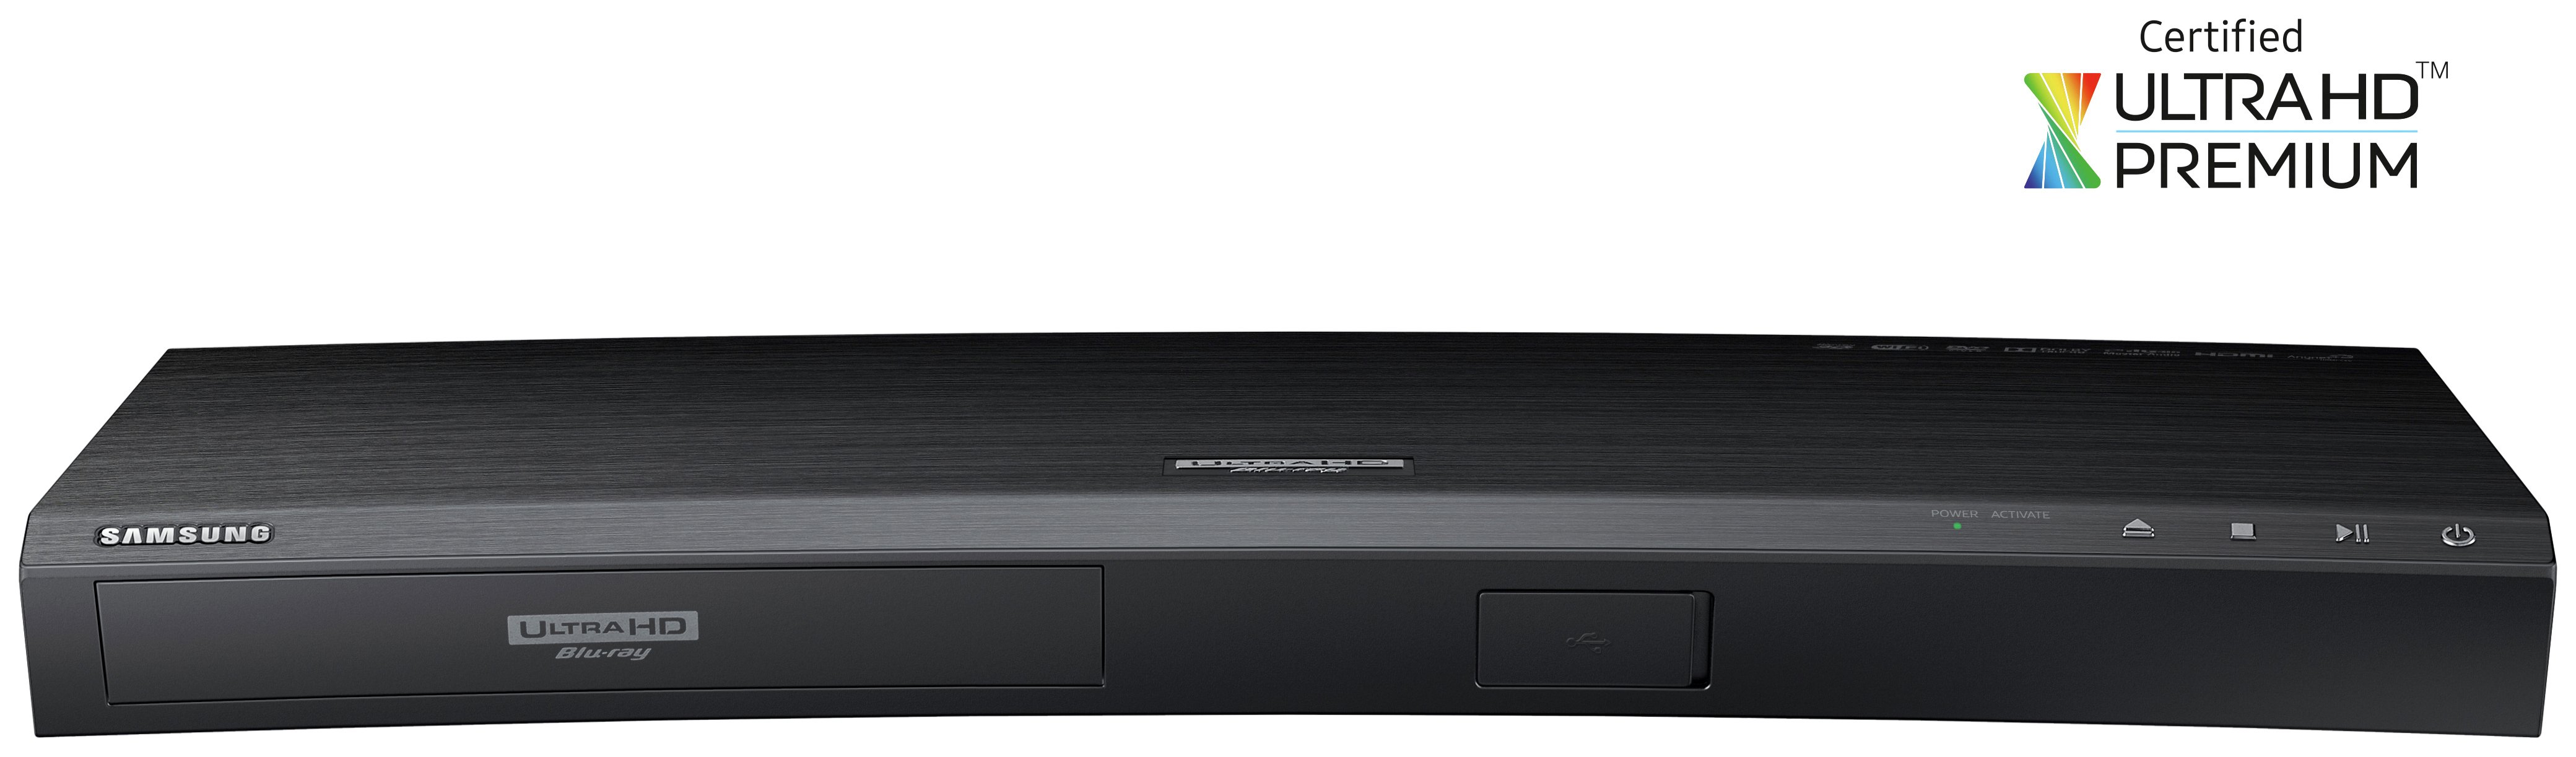 Samsung UBD-K8500 4K Ultra HD Blu-ray Player